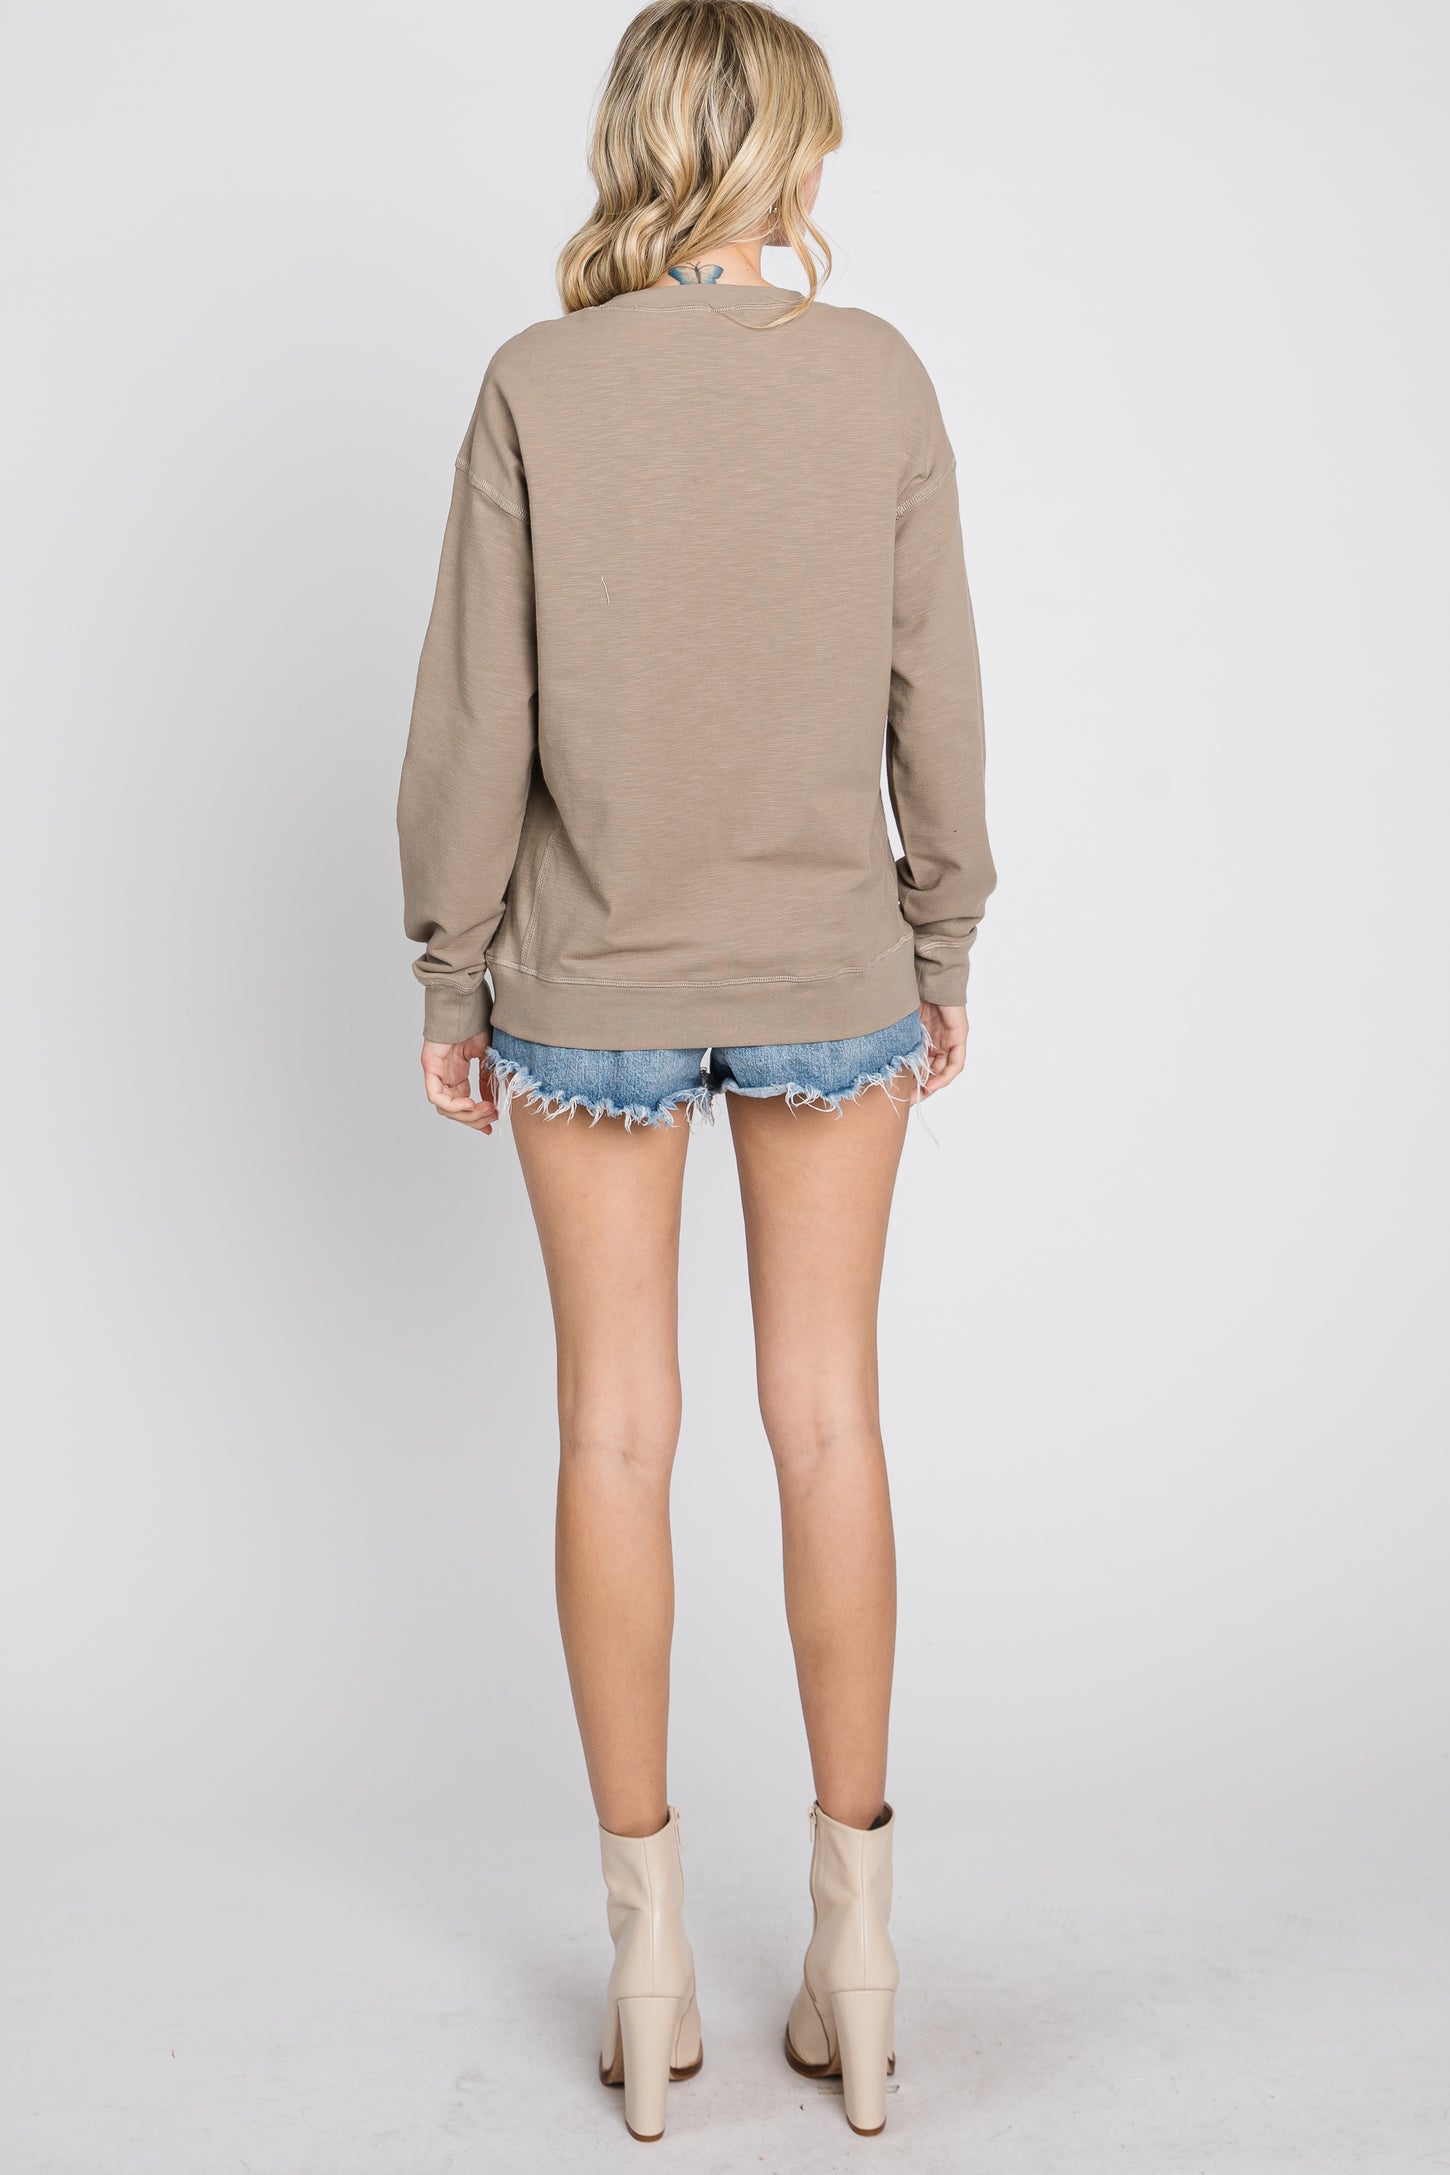 Taupe Long Sleeve Side Pocket Sweatshirt